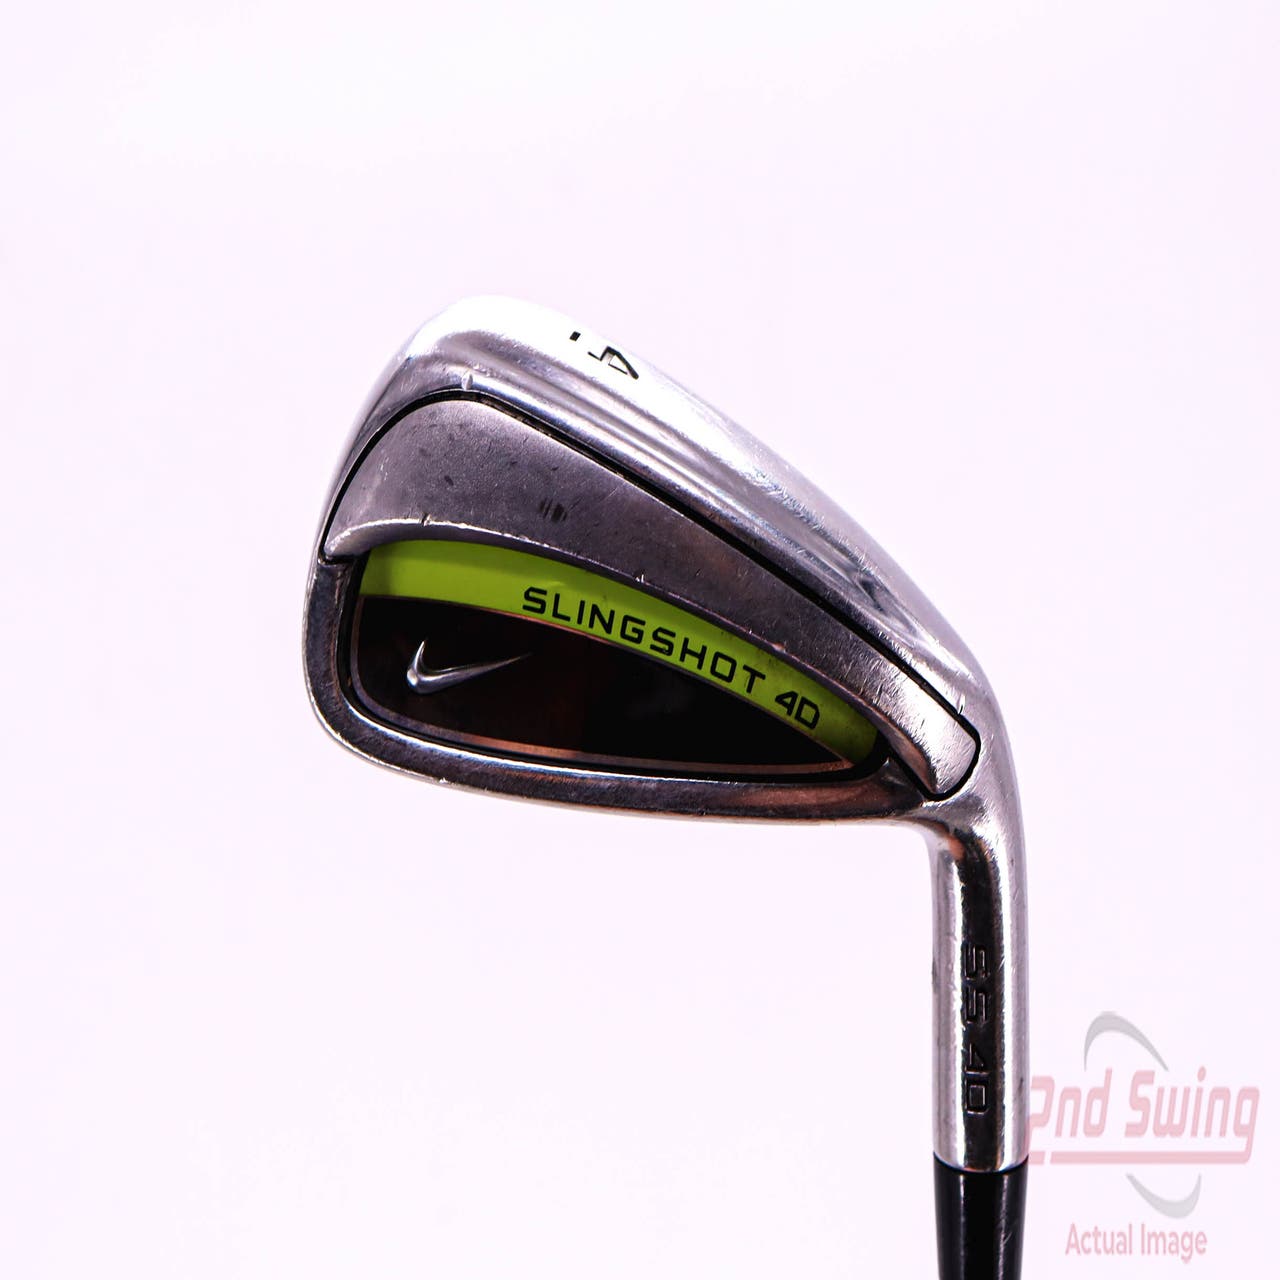 Slingshot 4D Single (D-42330517590) 2nd Swing Golf